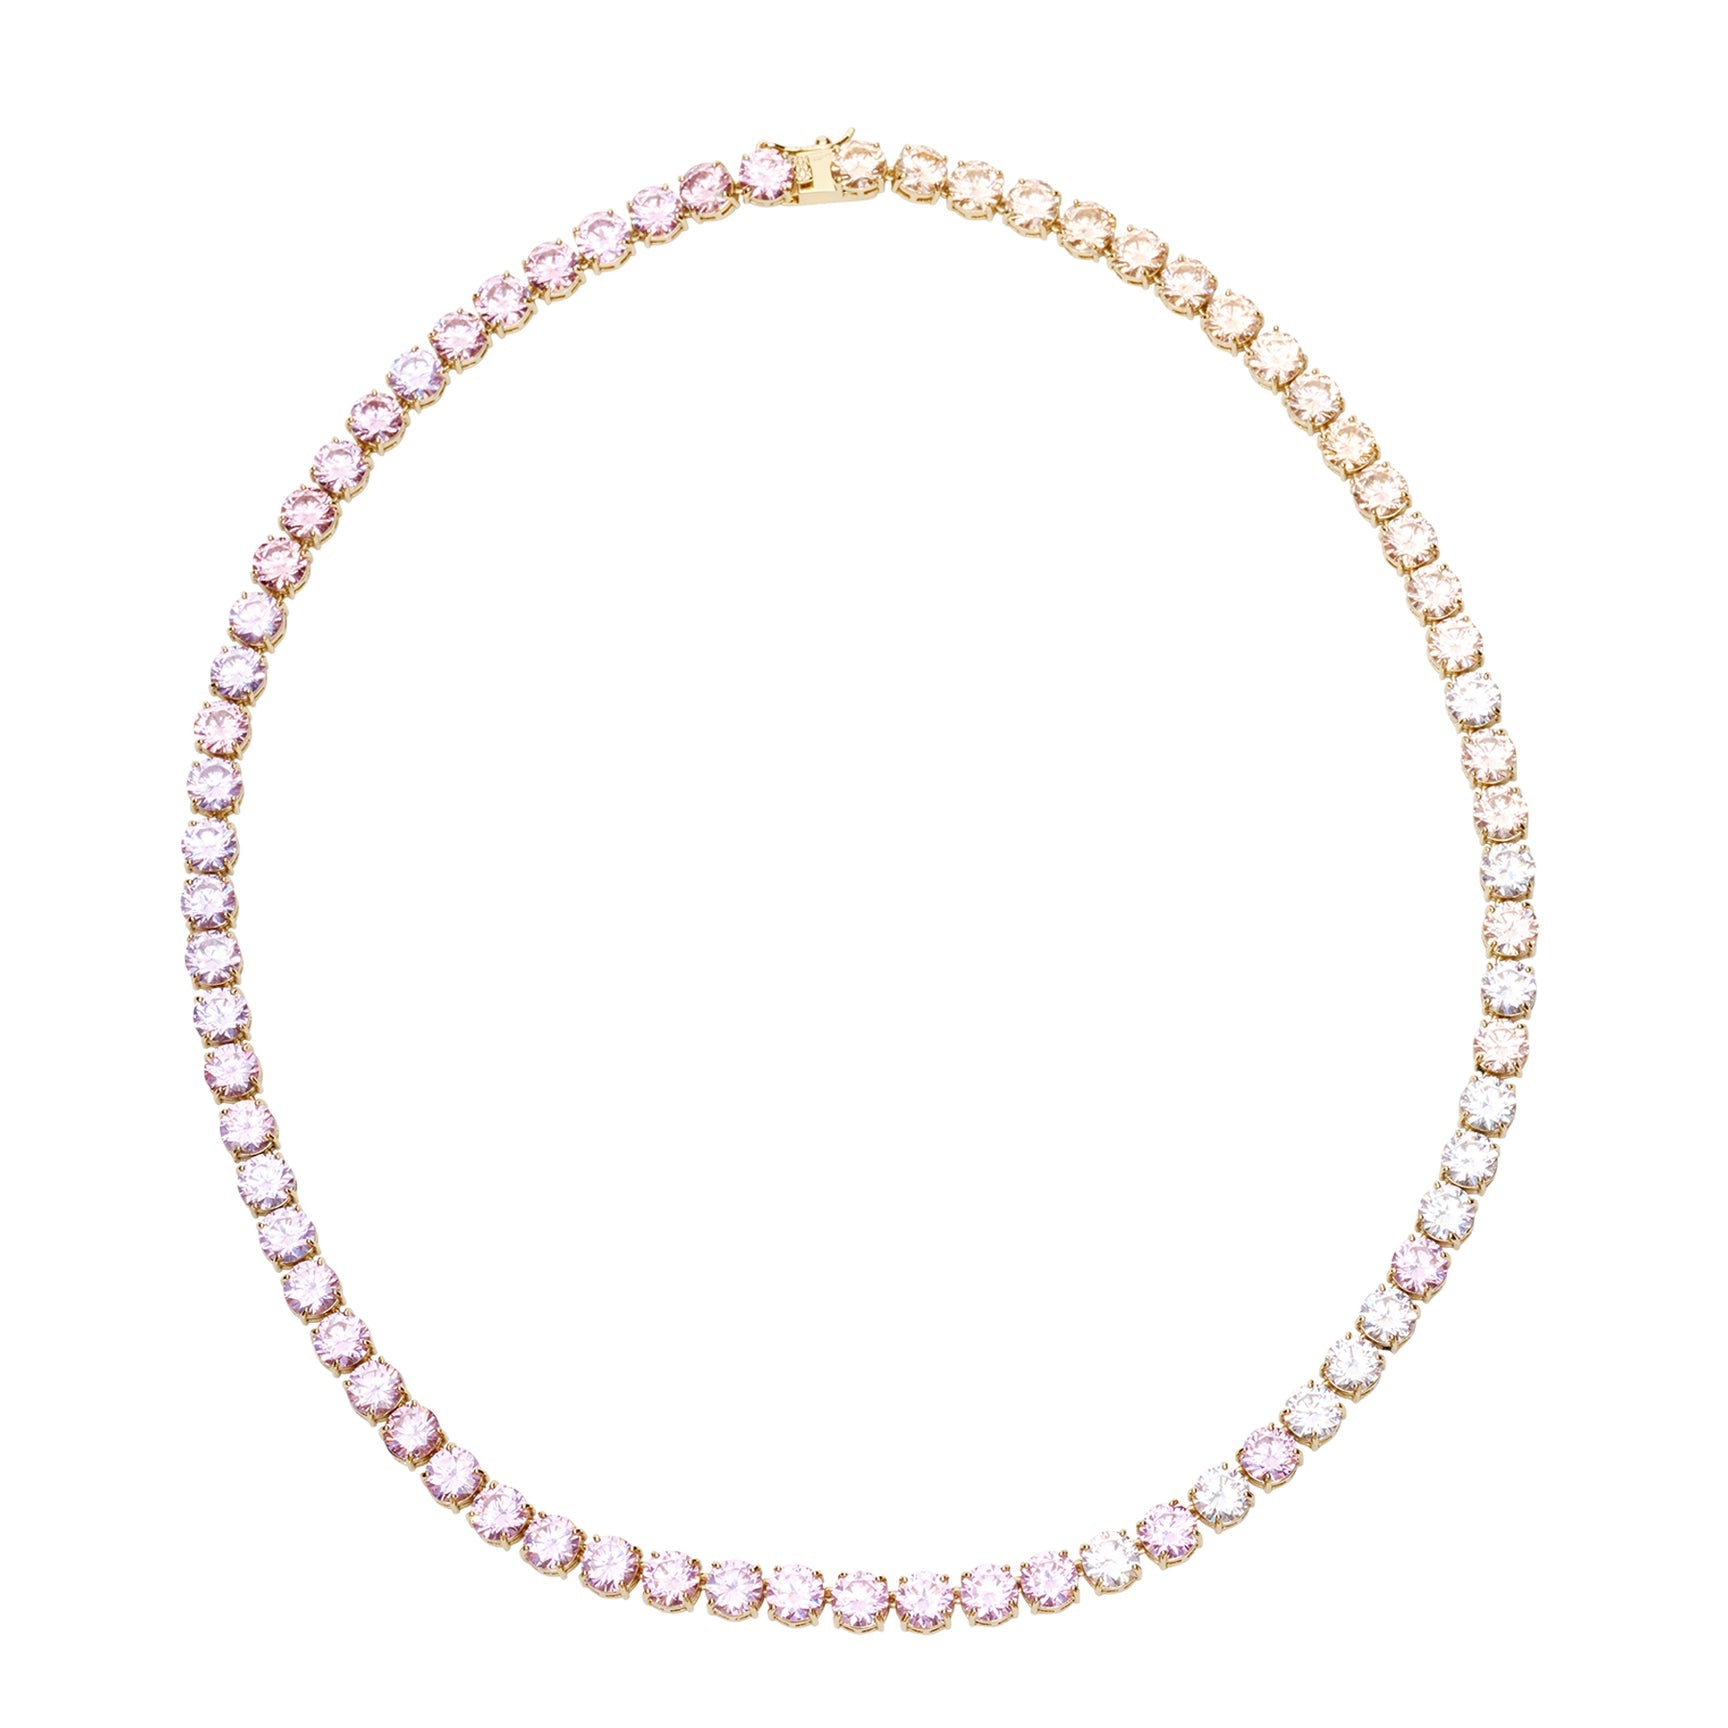 $225 Mignonne Gavigan Women's 14k Gold Plated Maj Pearl Necklace | eBay